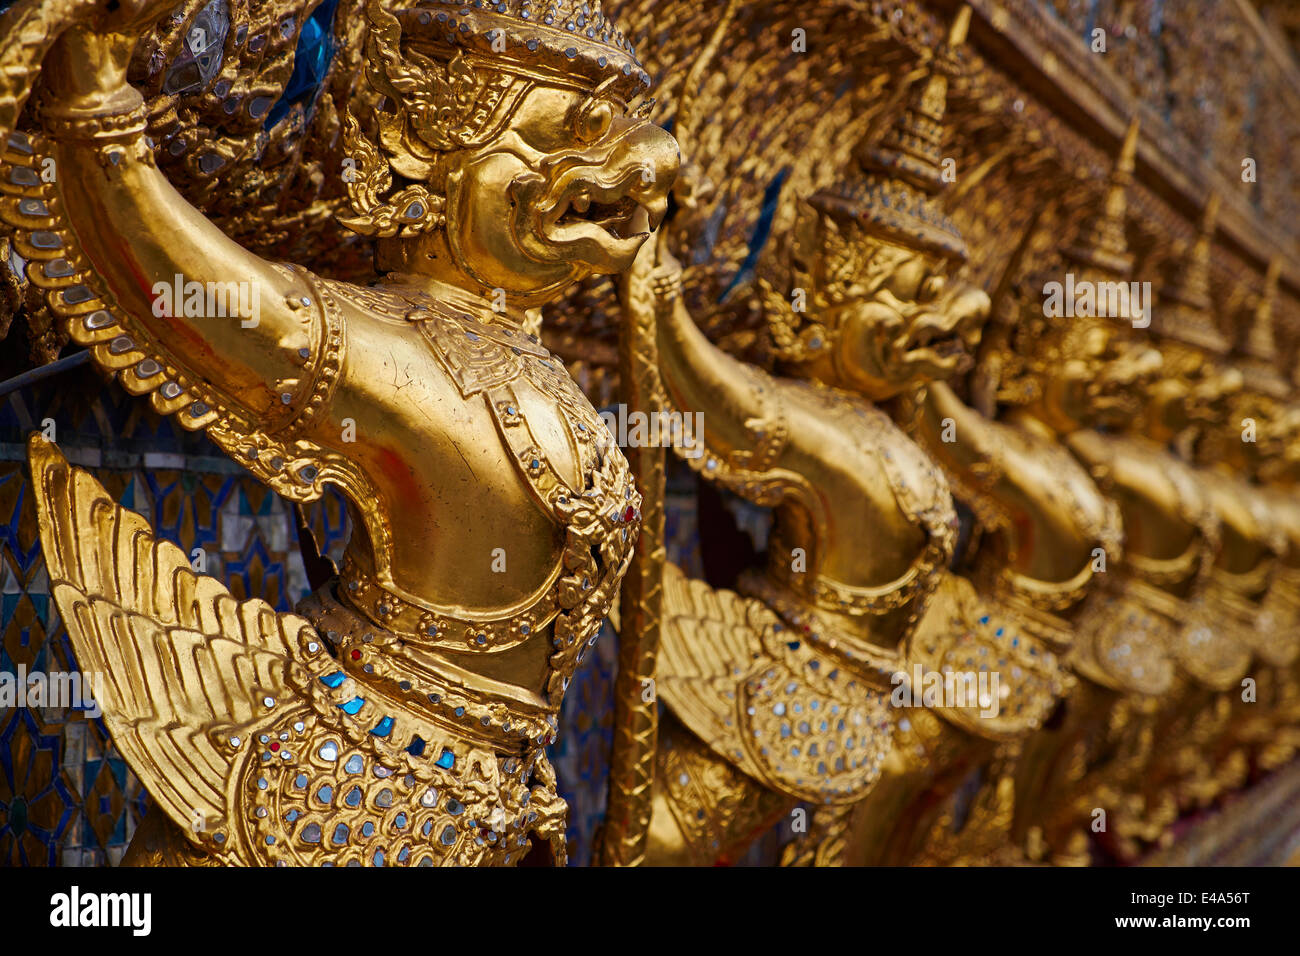 Wat Phra Kaew inside the Royal Palace, Bangkok, Thailand, Southeast Asia, Asia Stock Photo